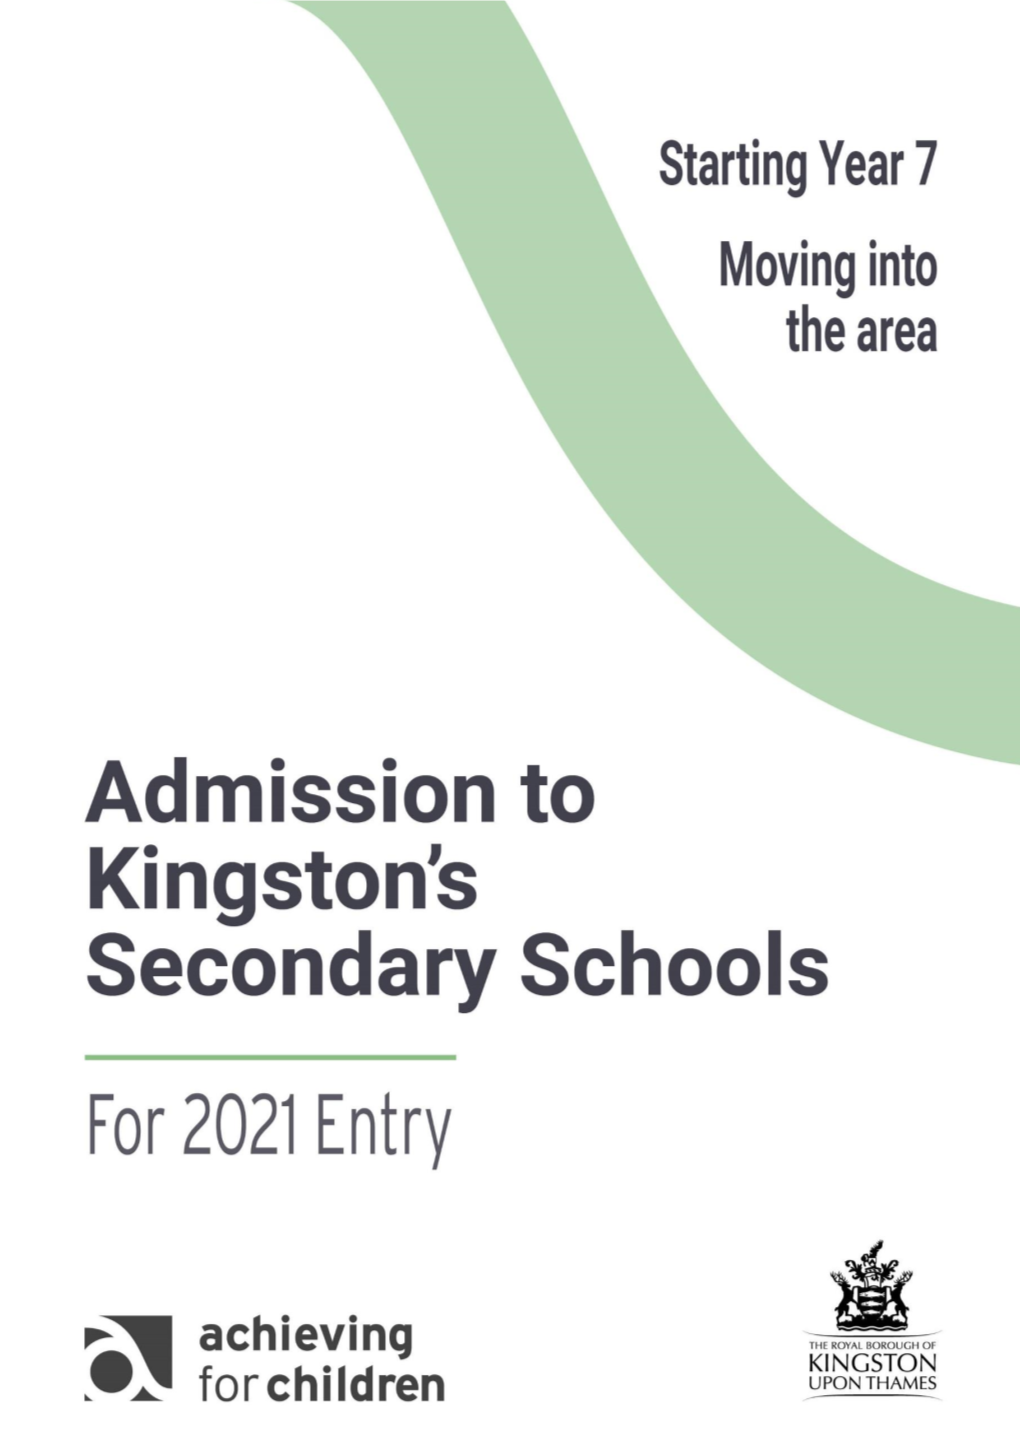 Map of Kingston Secondary Schools